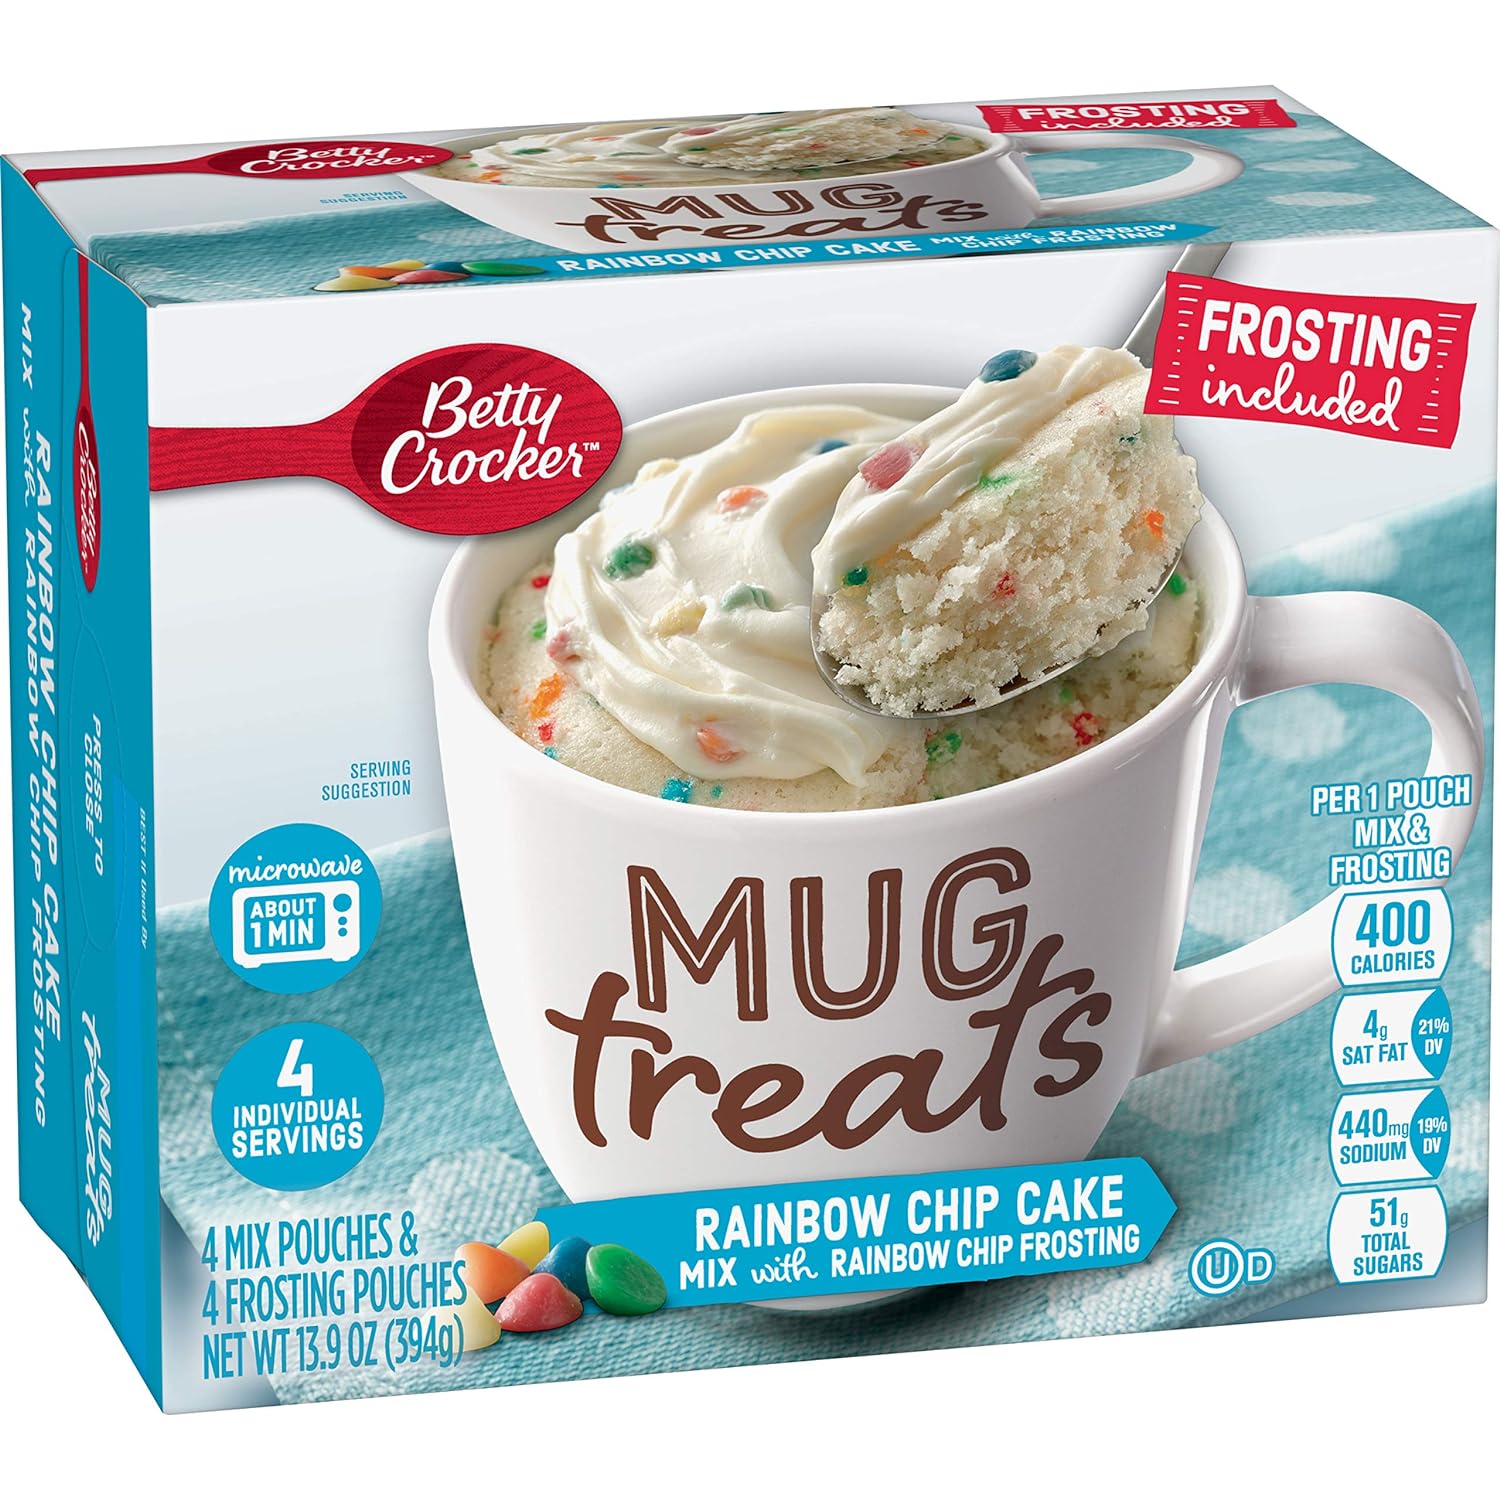 Betty Crocker Mug Treats Rainbow Chip Cake Mix with Frosting, 4 Servings, 13.9 oz